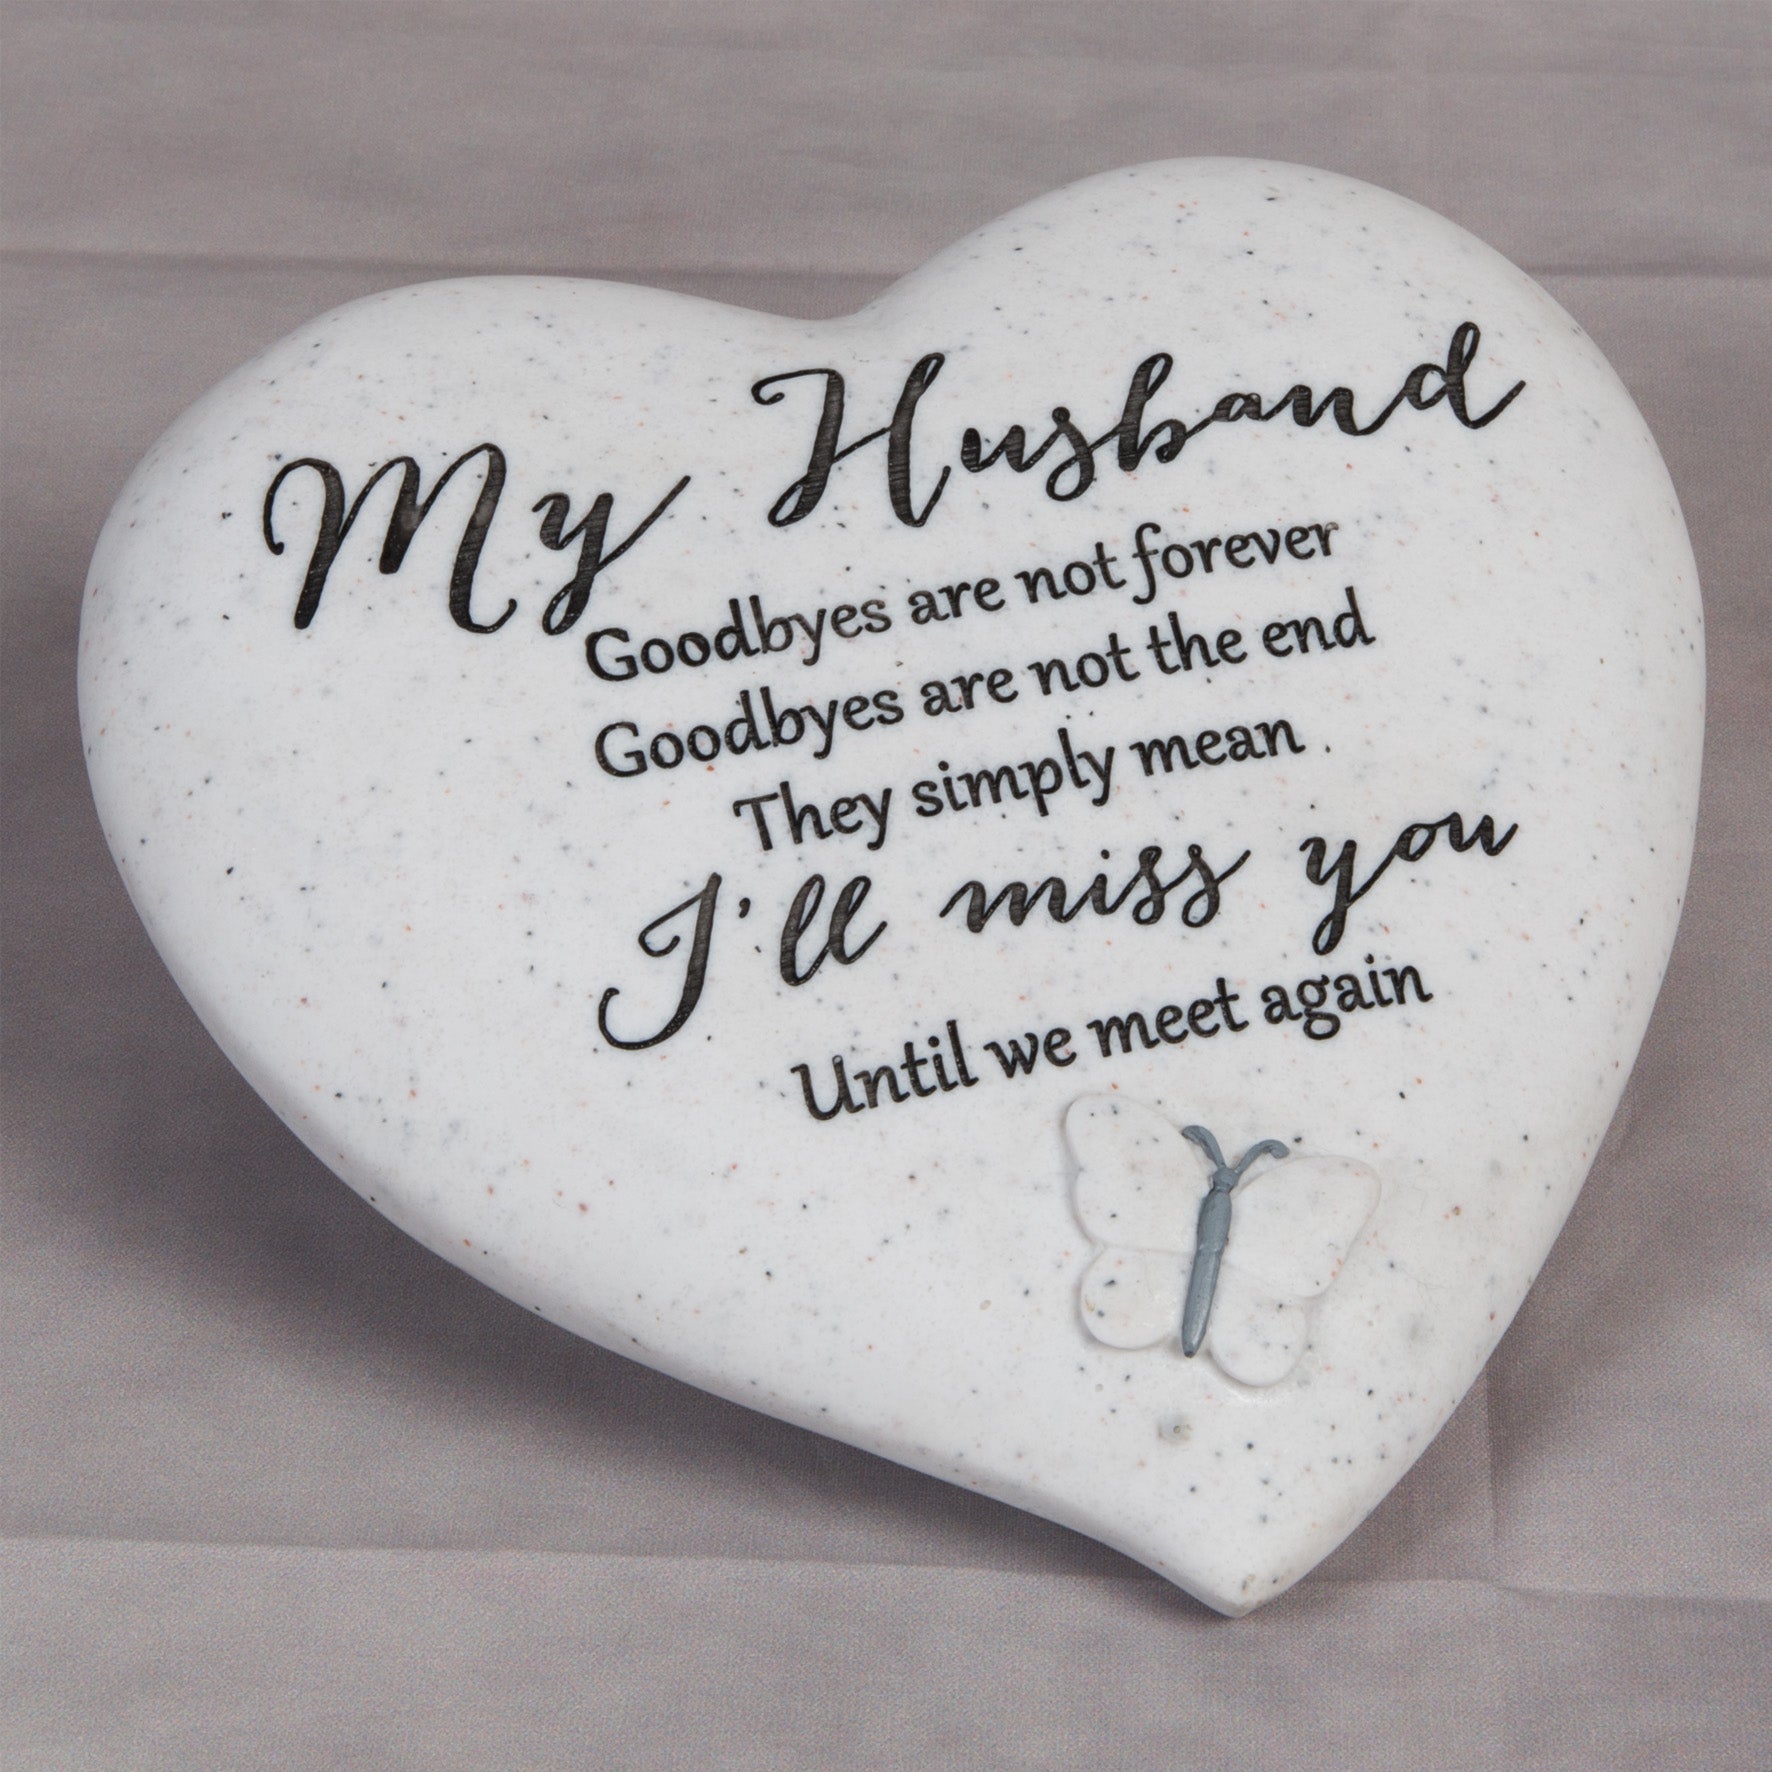 Widdop 62581 Memorial Heart Shaped Plaque - My Husband - Premium Memorial Giftware from Widdop Bingham - Just $12.95! Shop now at W Hurst & Son (IW) Ltd